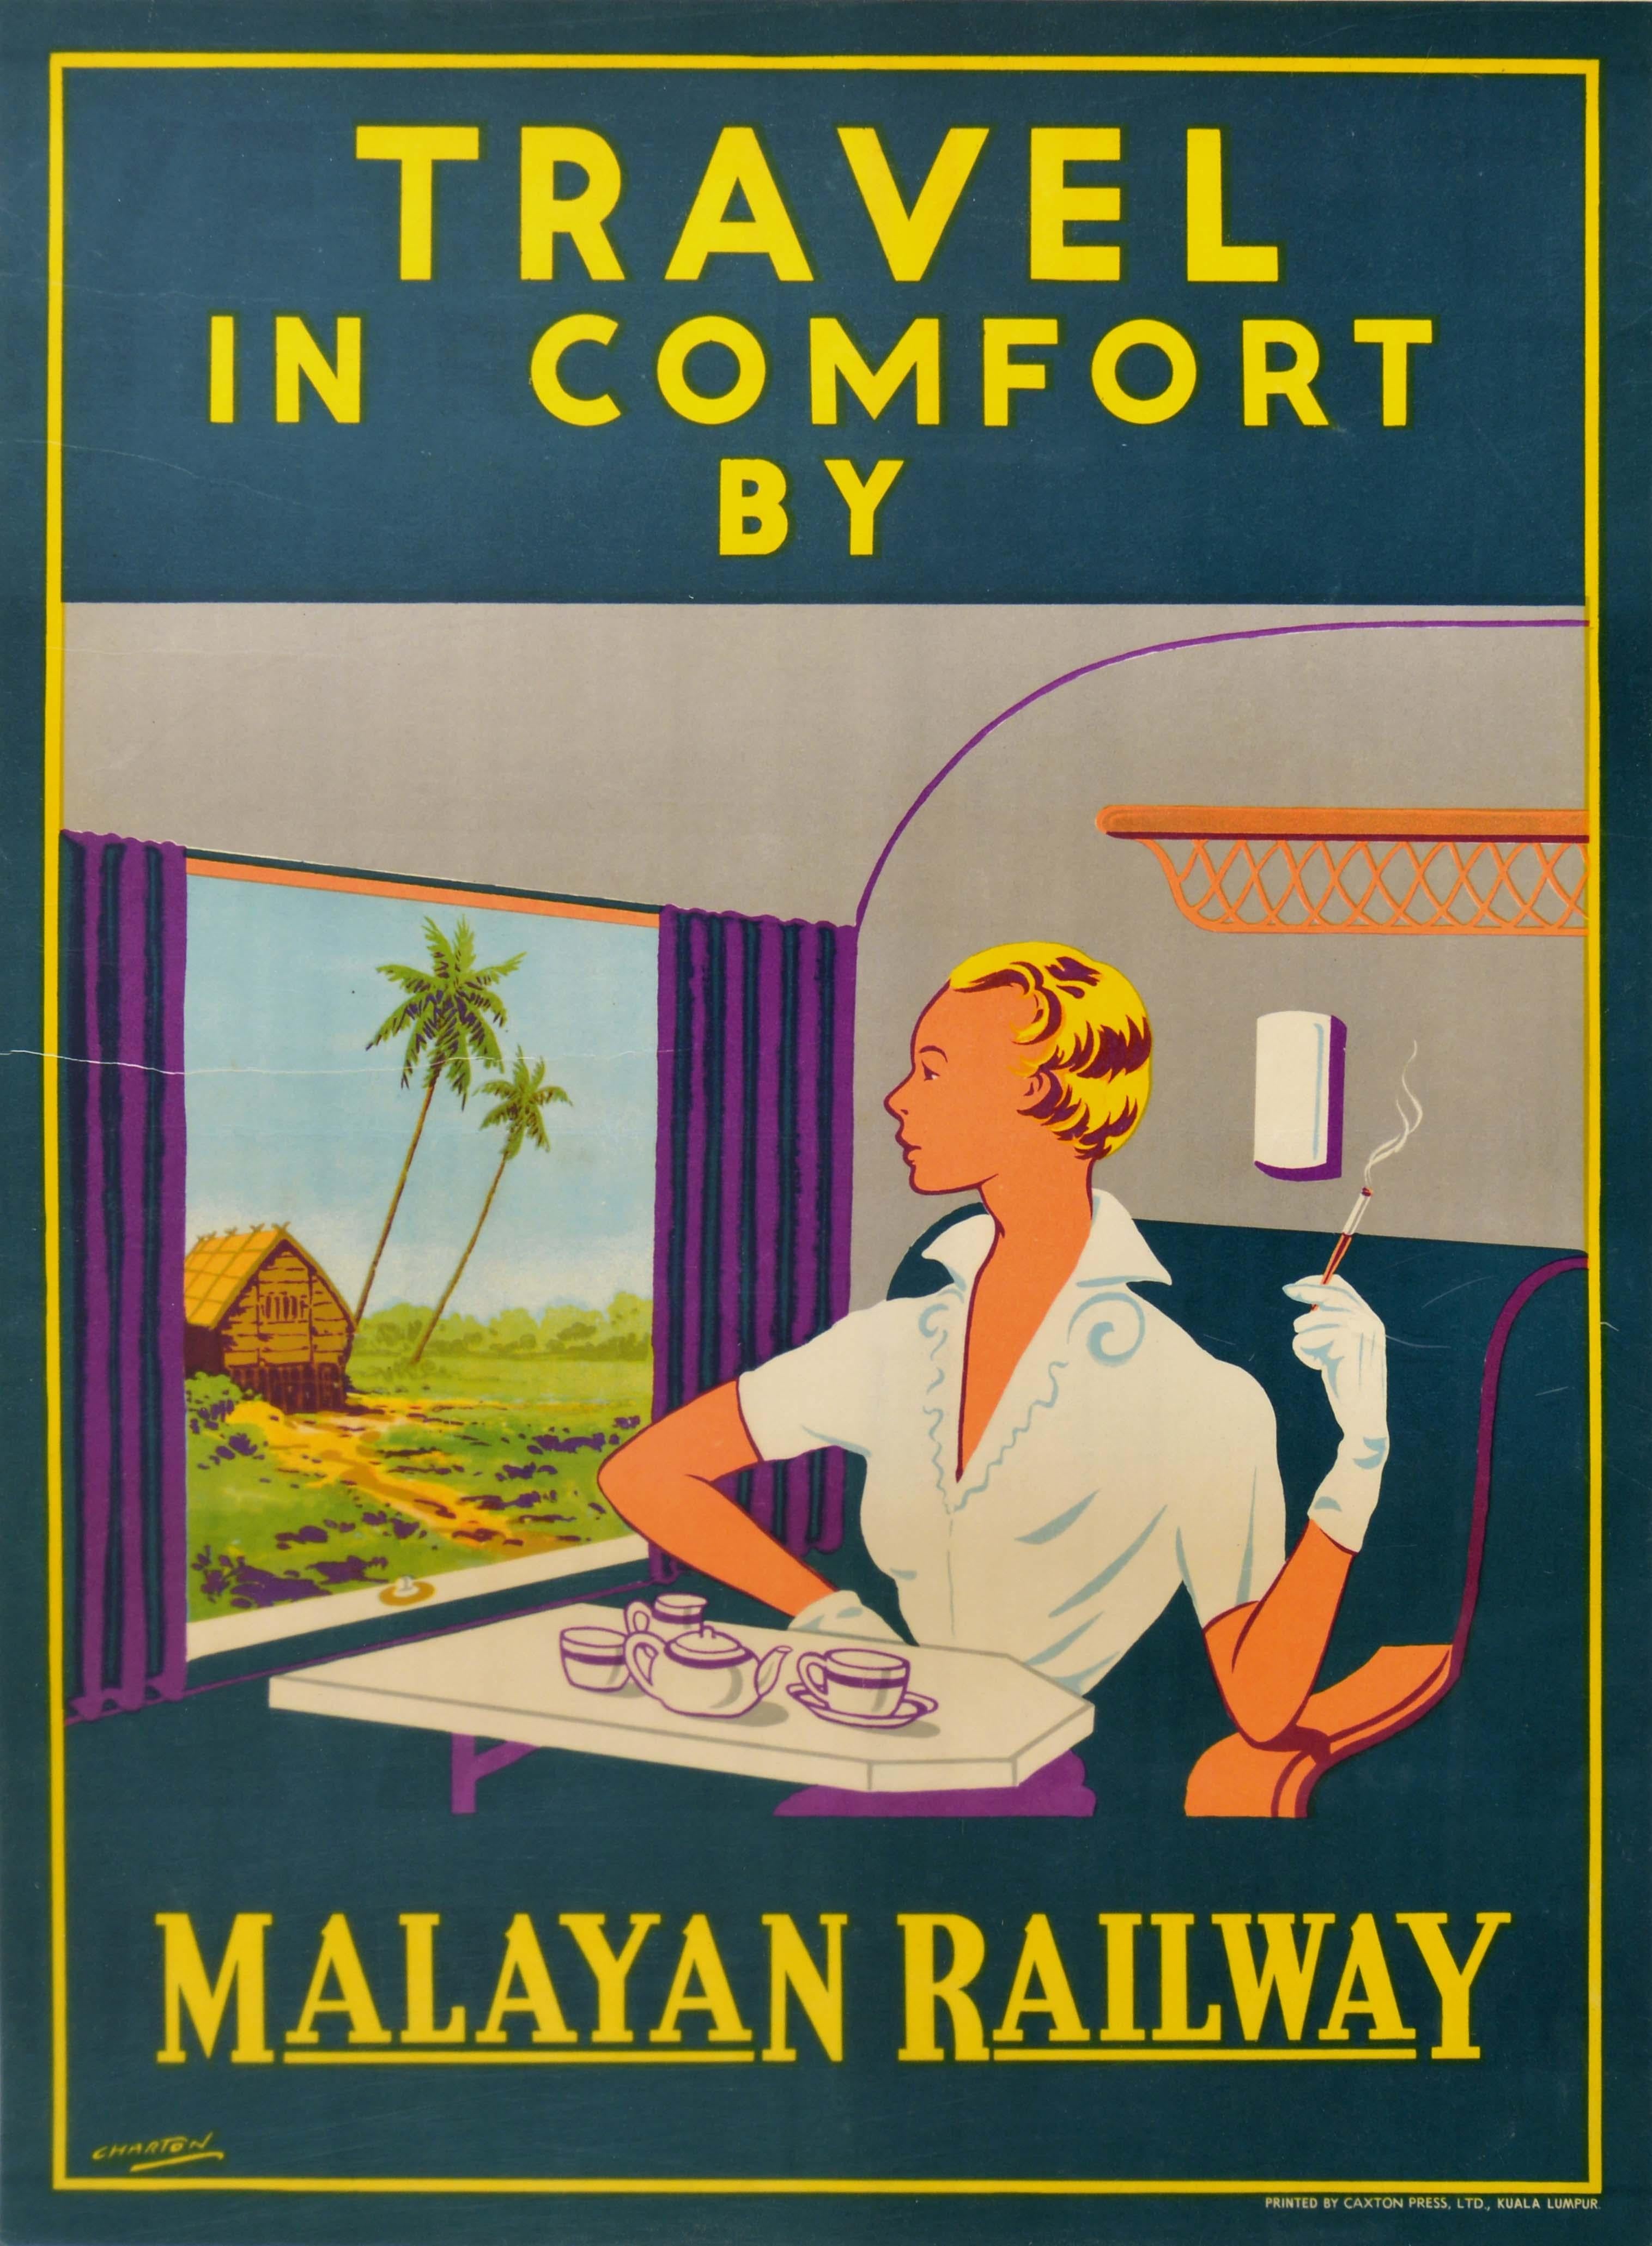 J.R. Charton Print - Original Vintage Art Deco Poster Travel In Comfort By Malayan Railway Train Asia